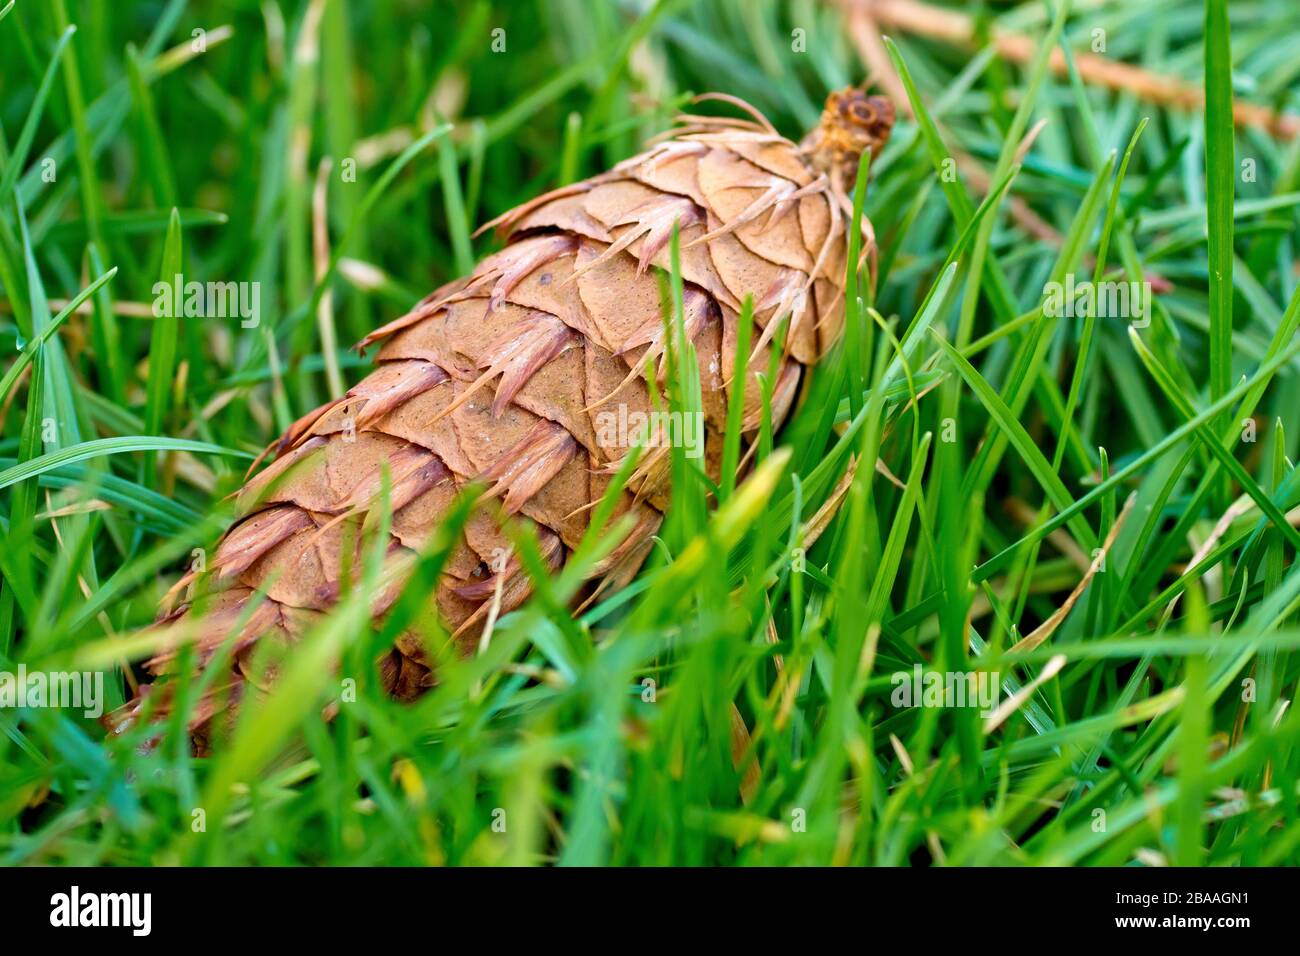 Douglas Fir (pseudotsuga menziesii), close up of a fallen mature cone lying in the grass. Stock Photo